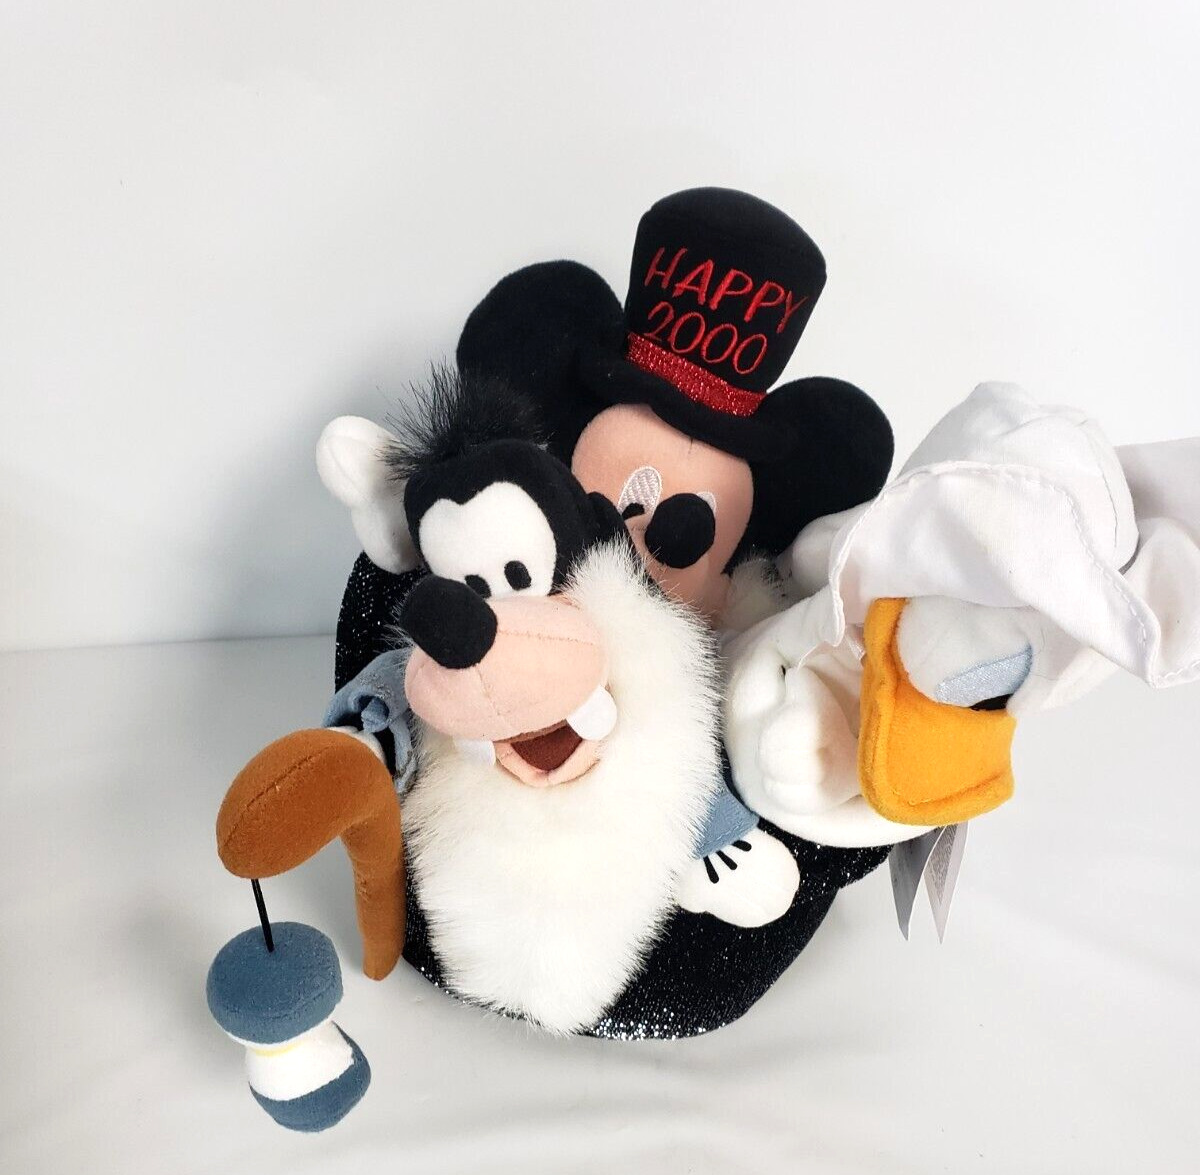 Disney Store Mickey Y2K 2000 Plush beanie set New old stock Donald Goofy in hat